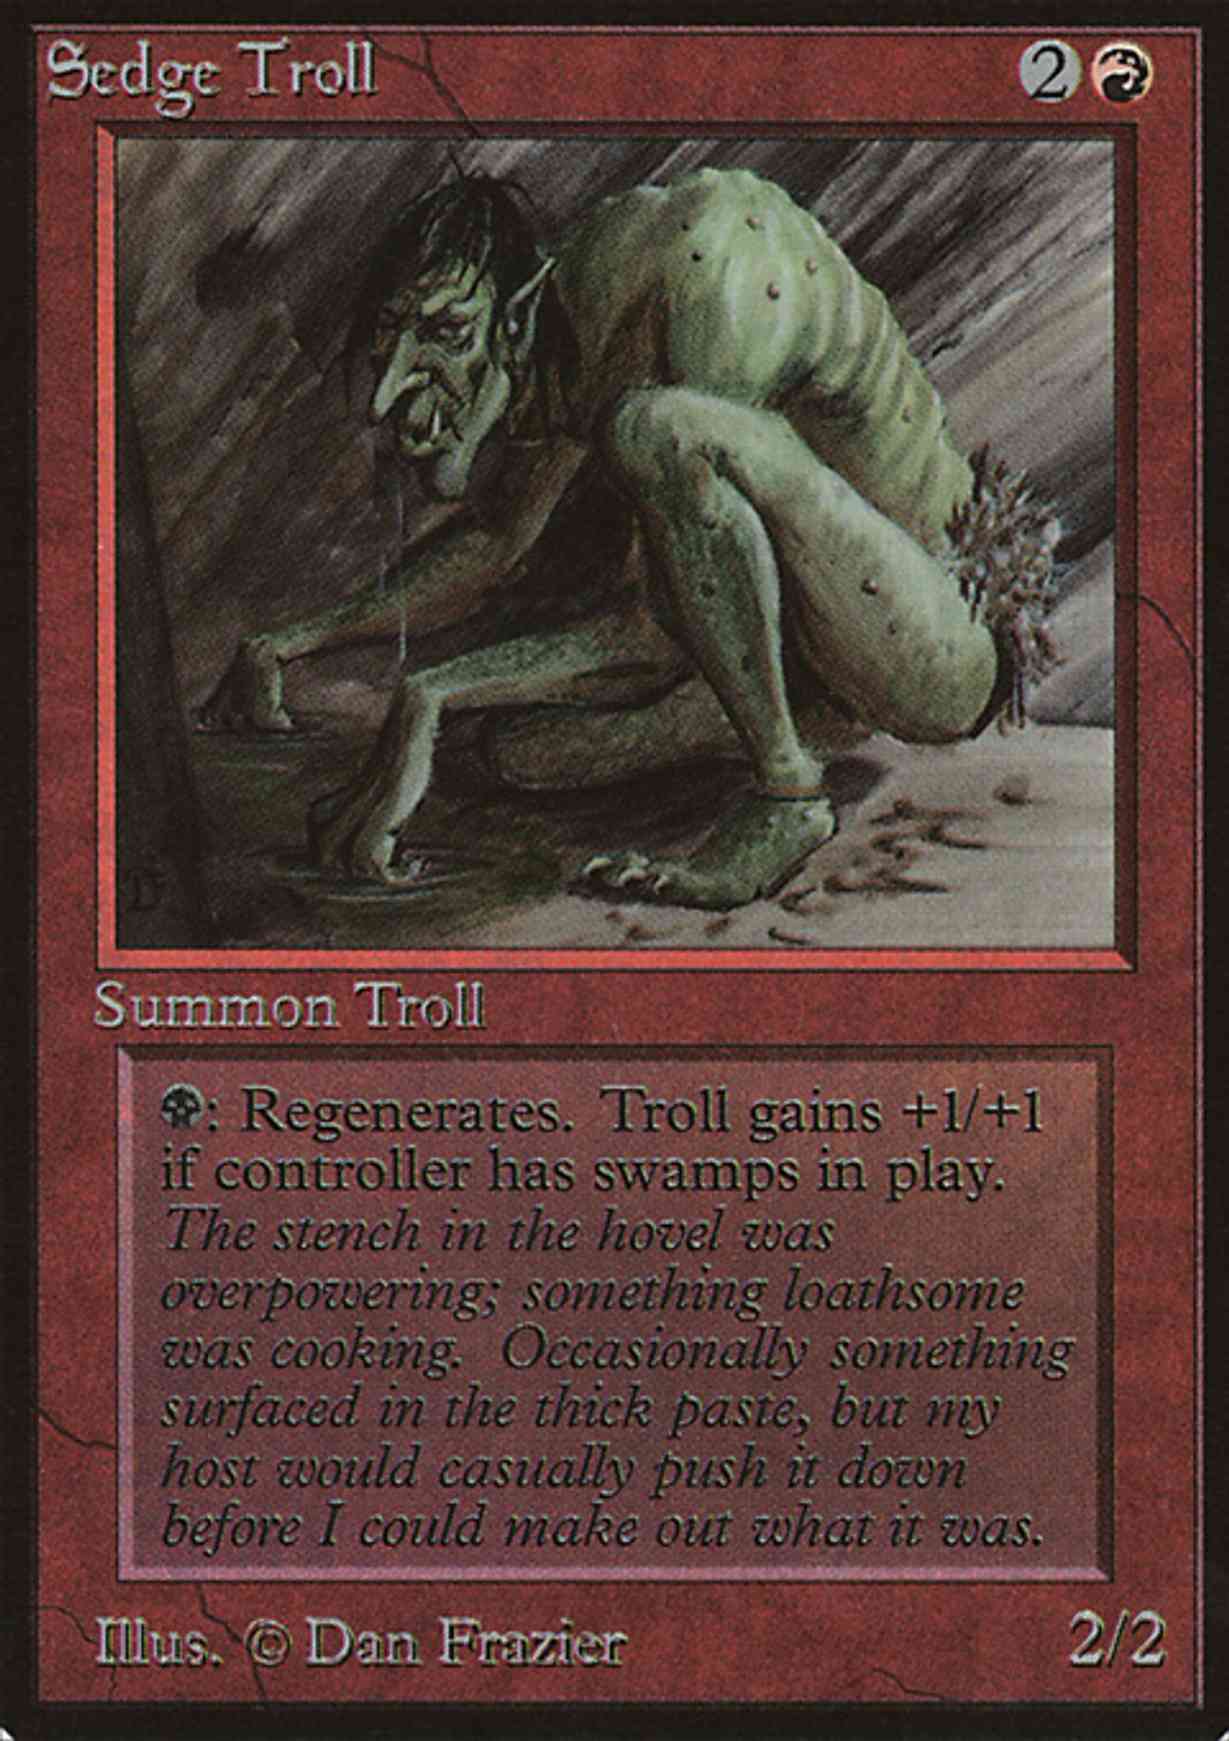 Sedge Troll magic card front